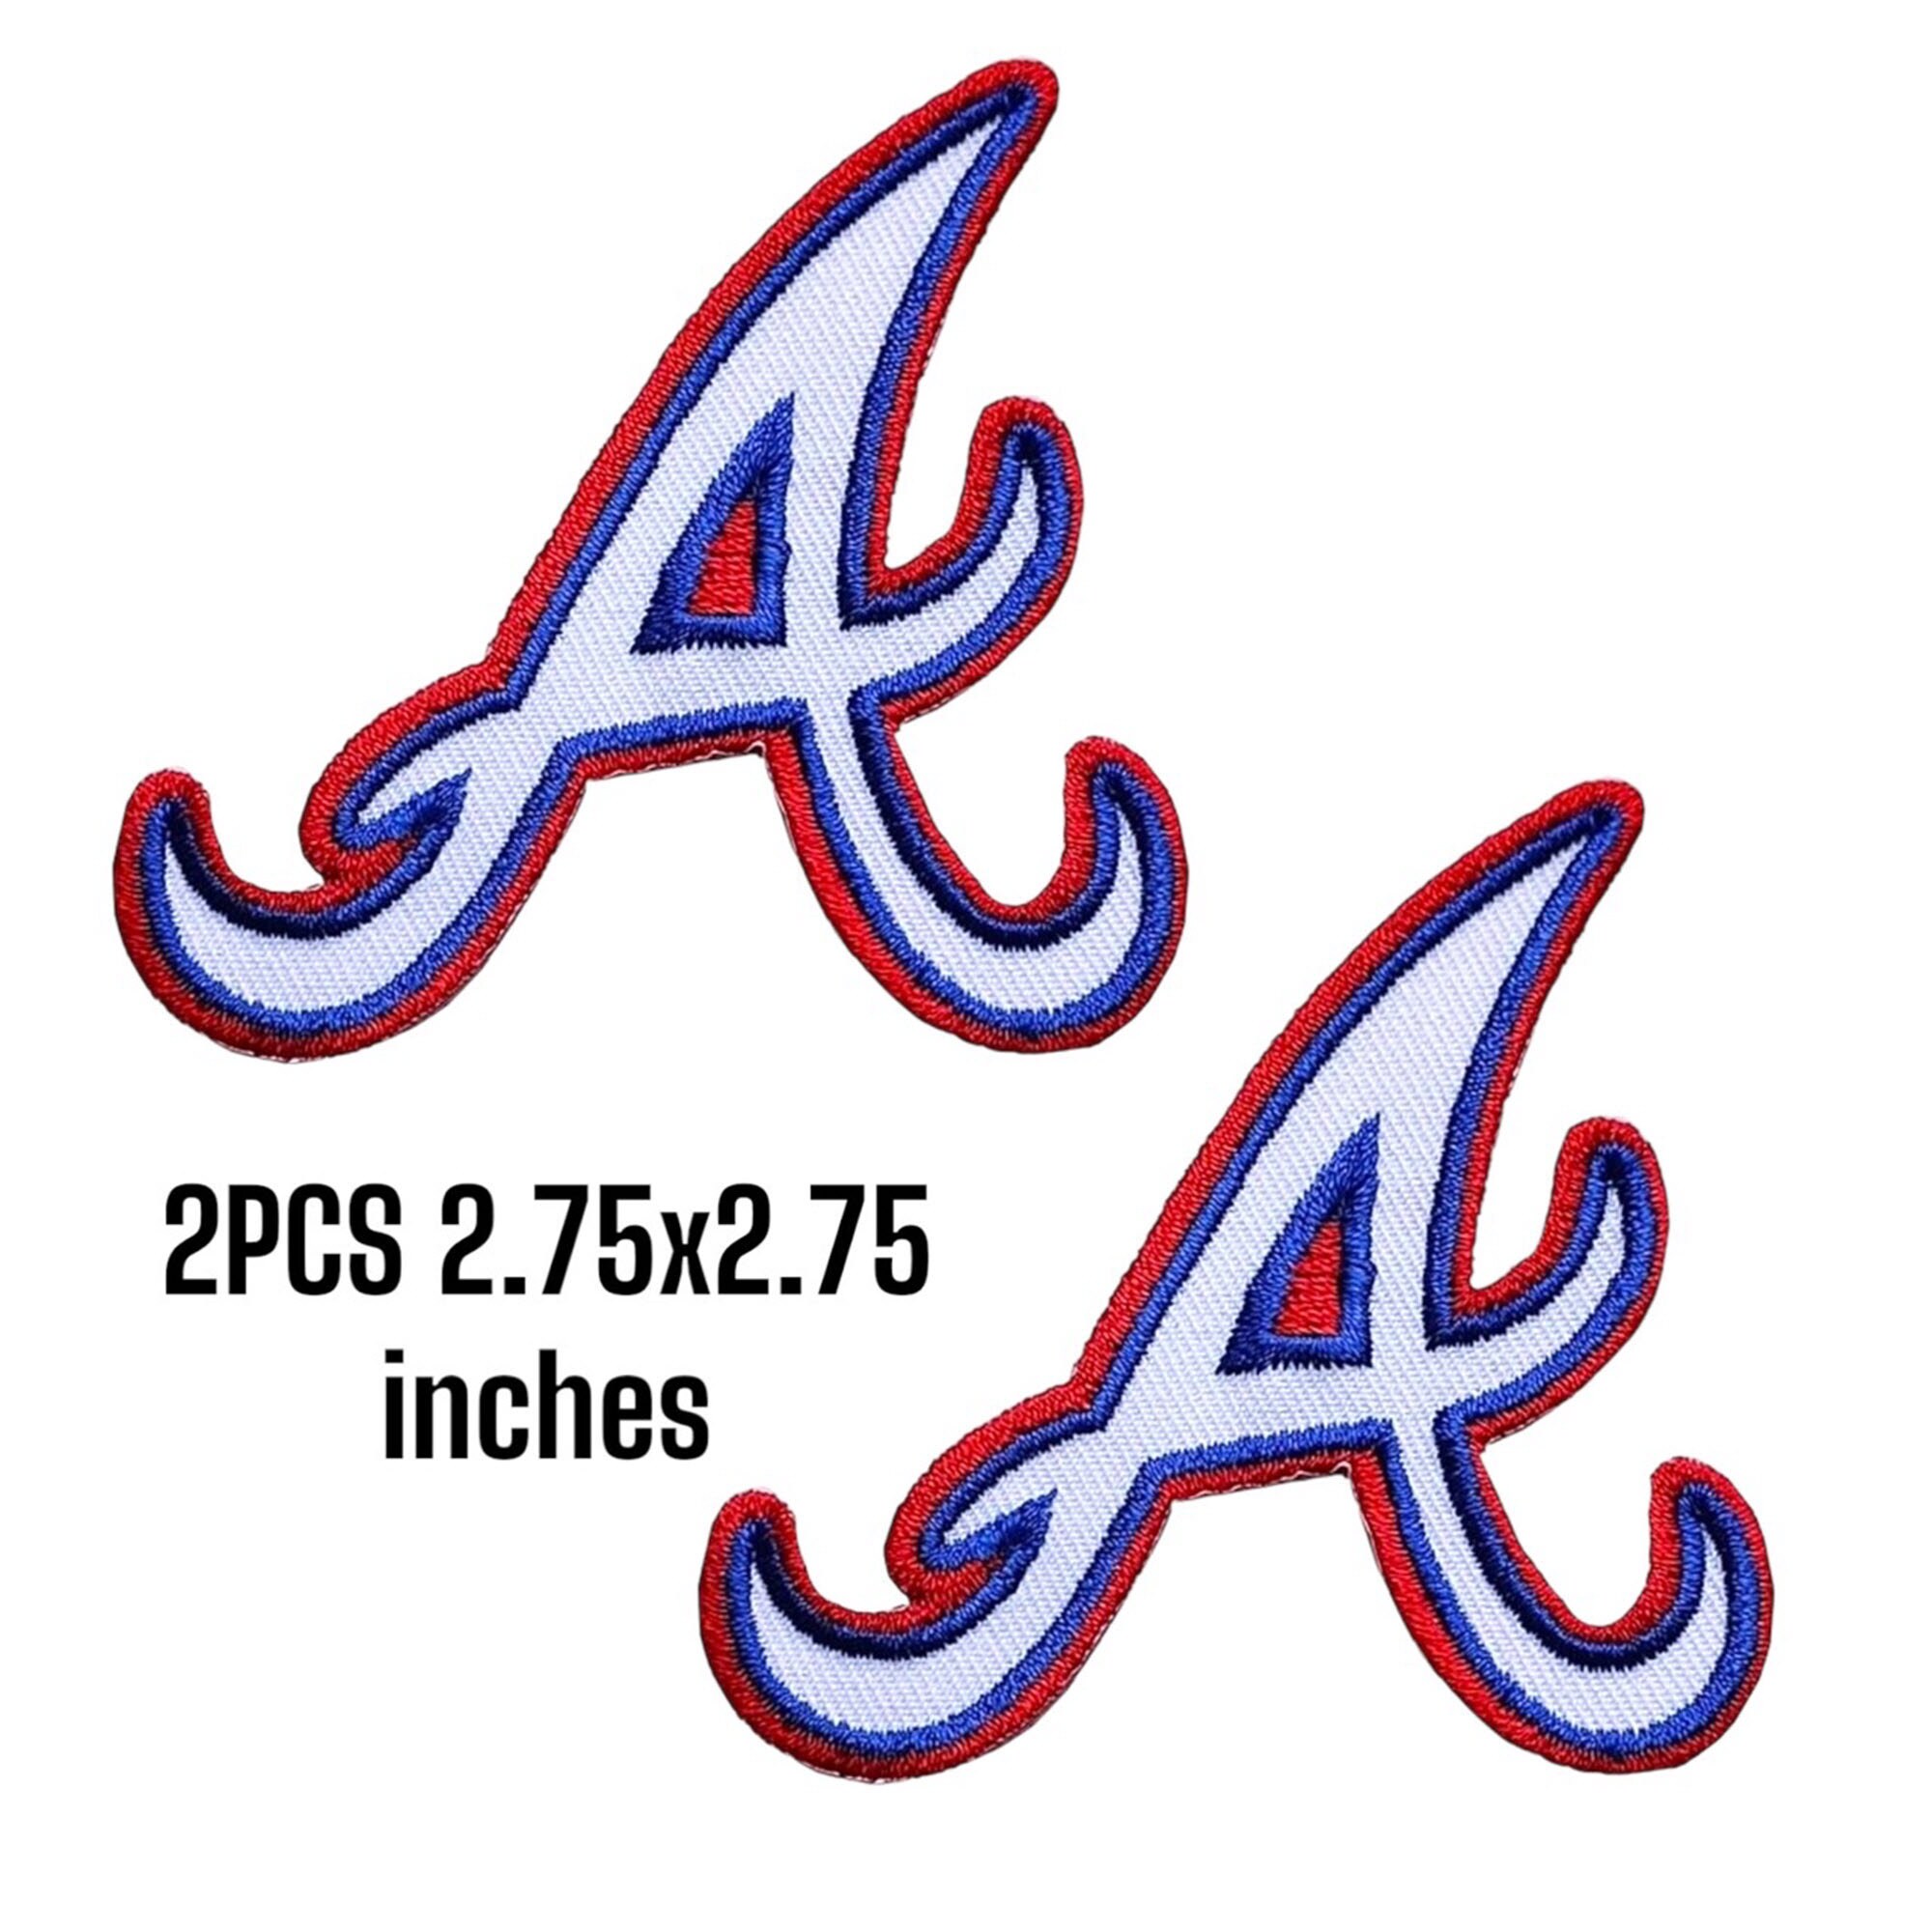 Atlanta Braves logo machine embroidery design for instant download